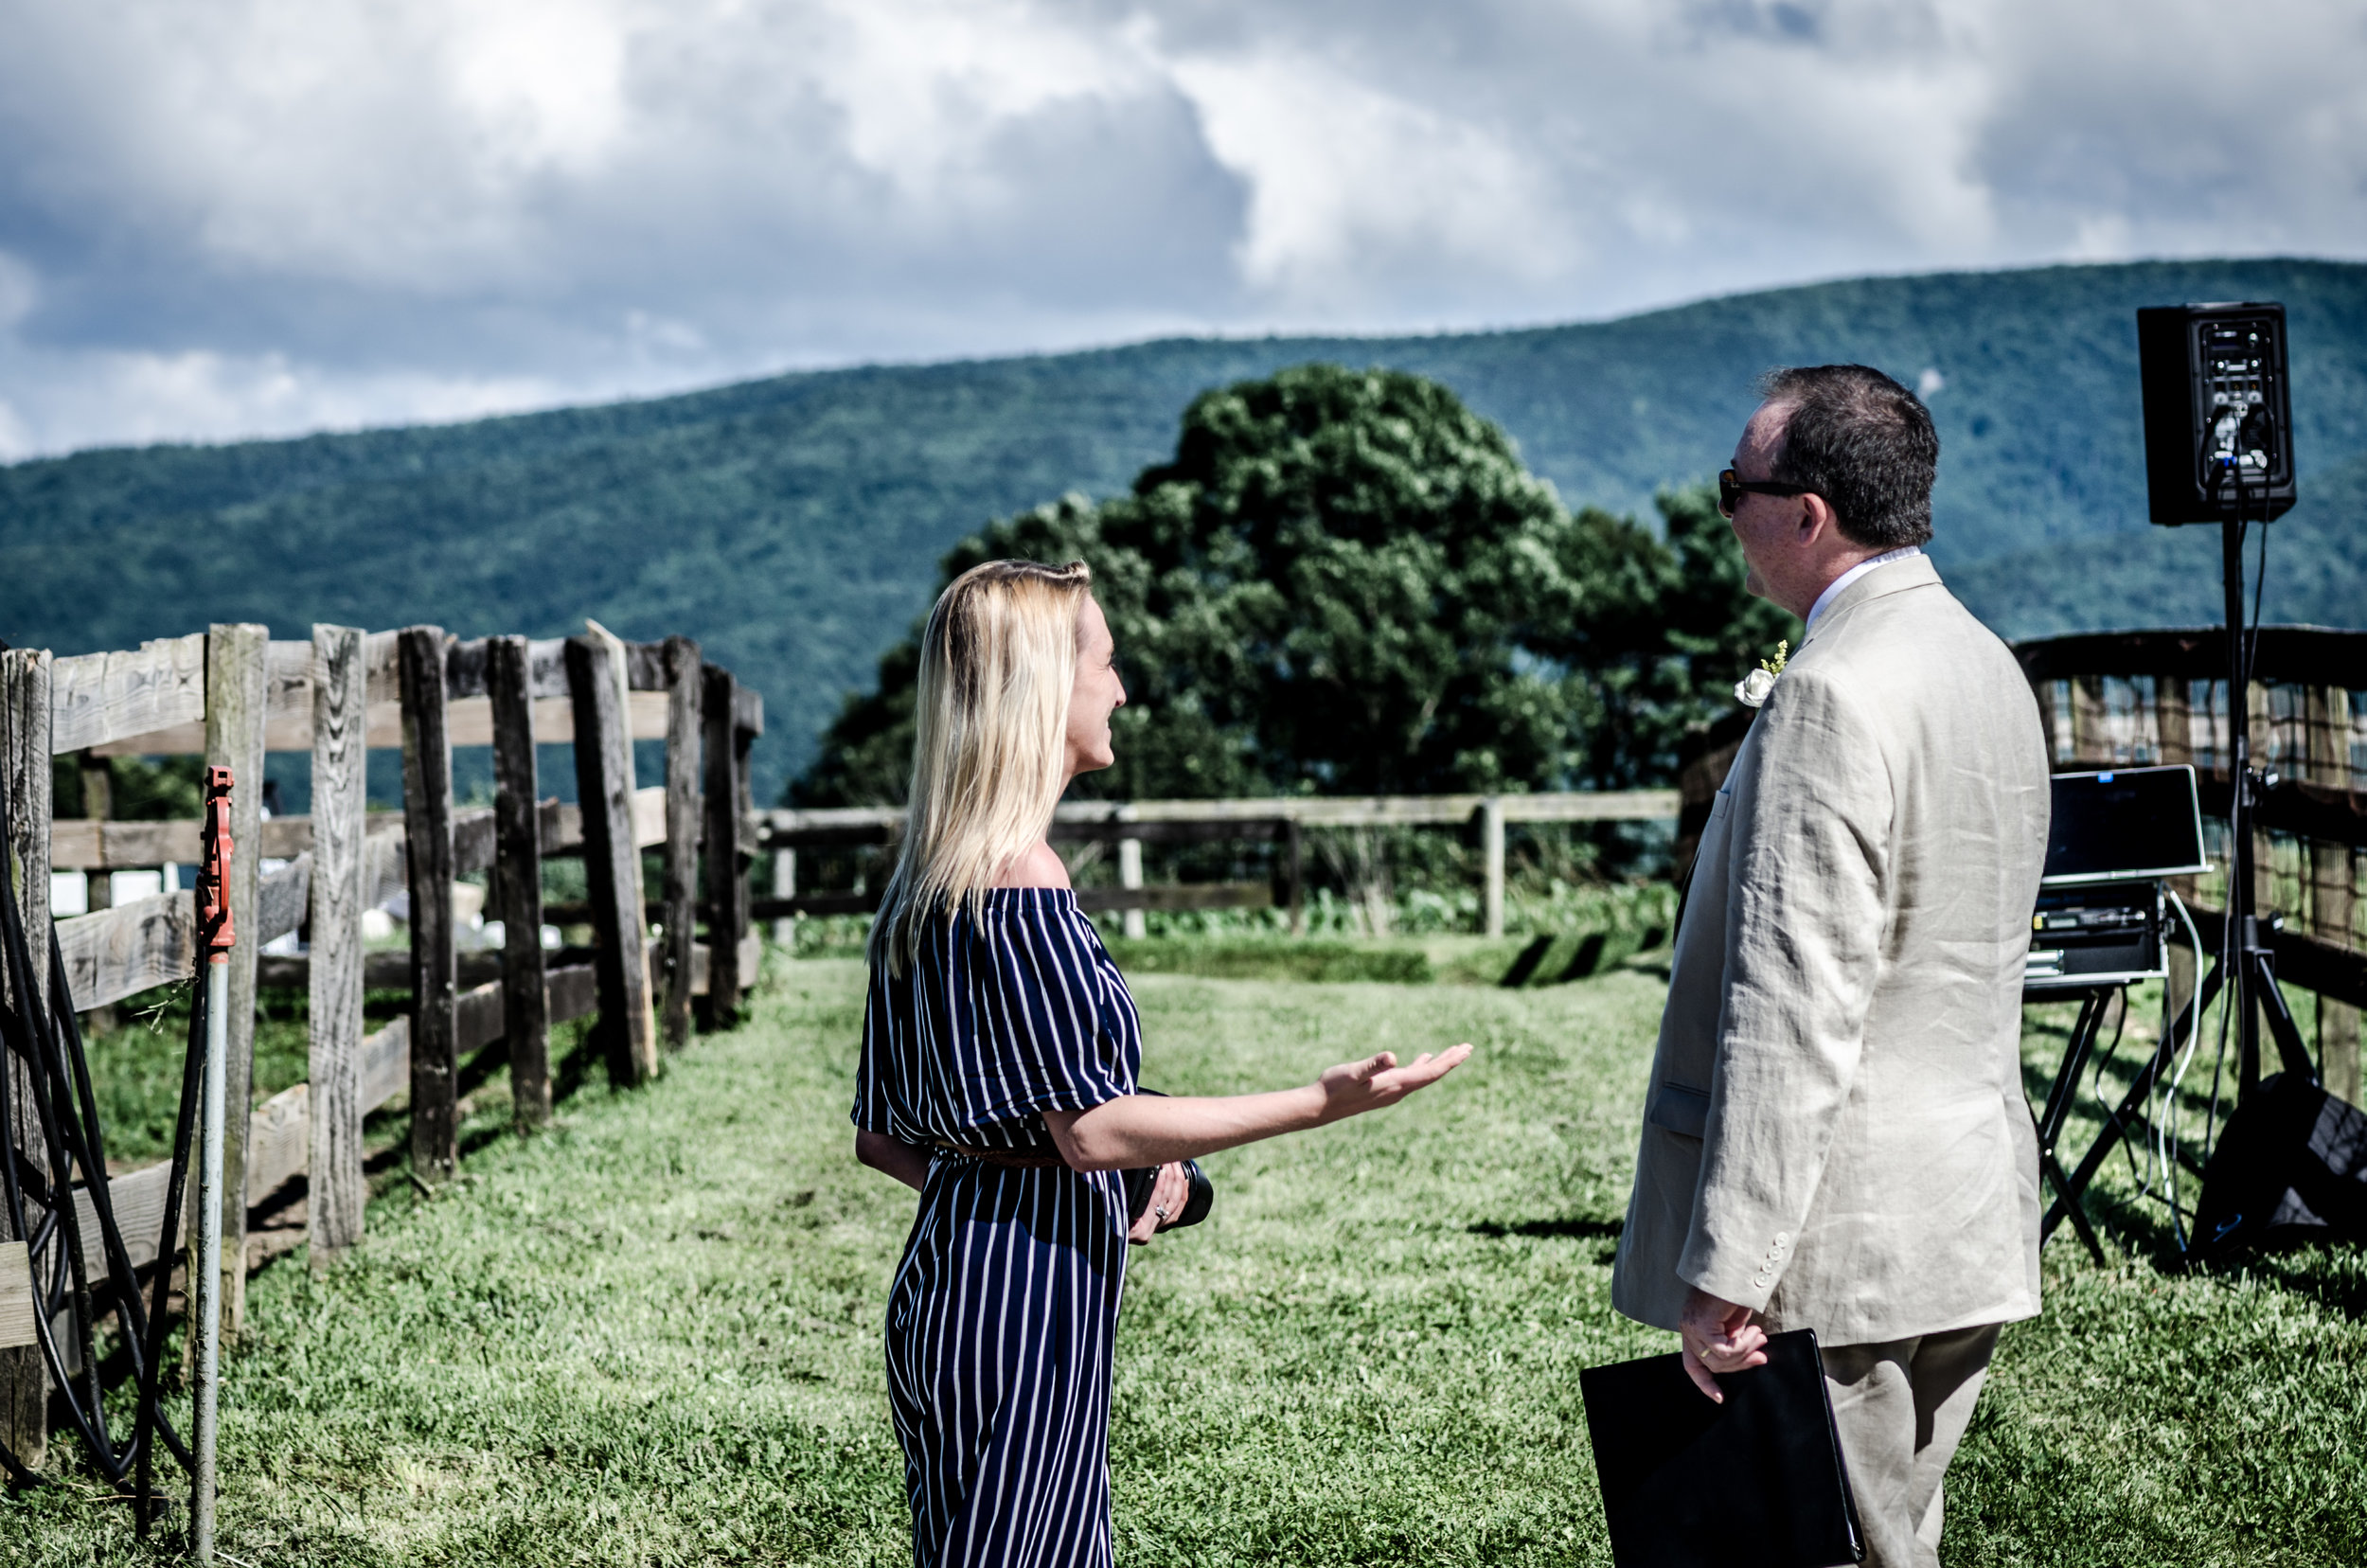 2018.06.22 Hardy-Baty Wedding Weekend in the Virginia Countryside-108.jpg